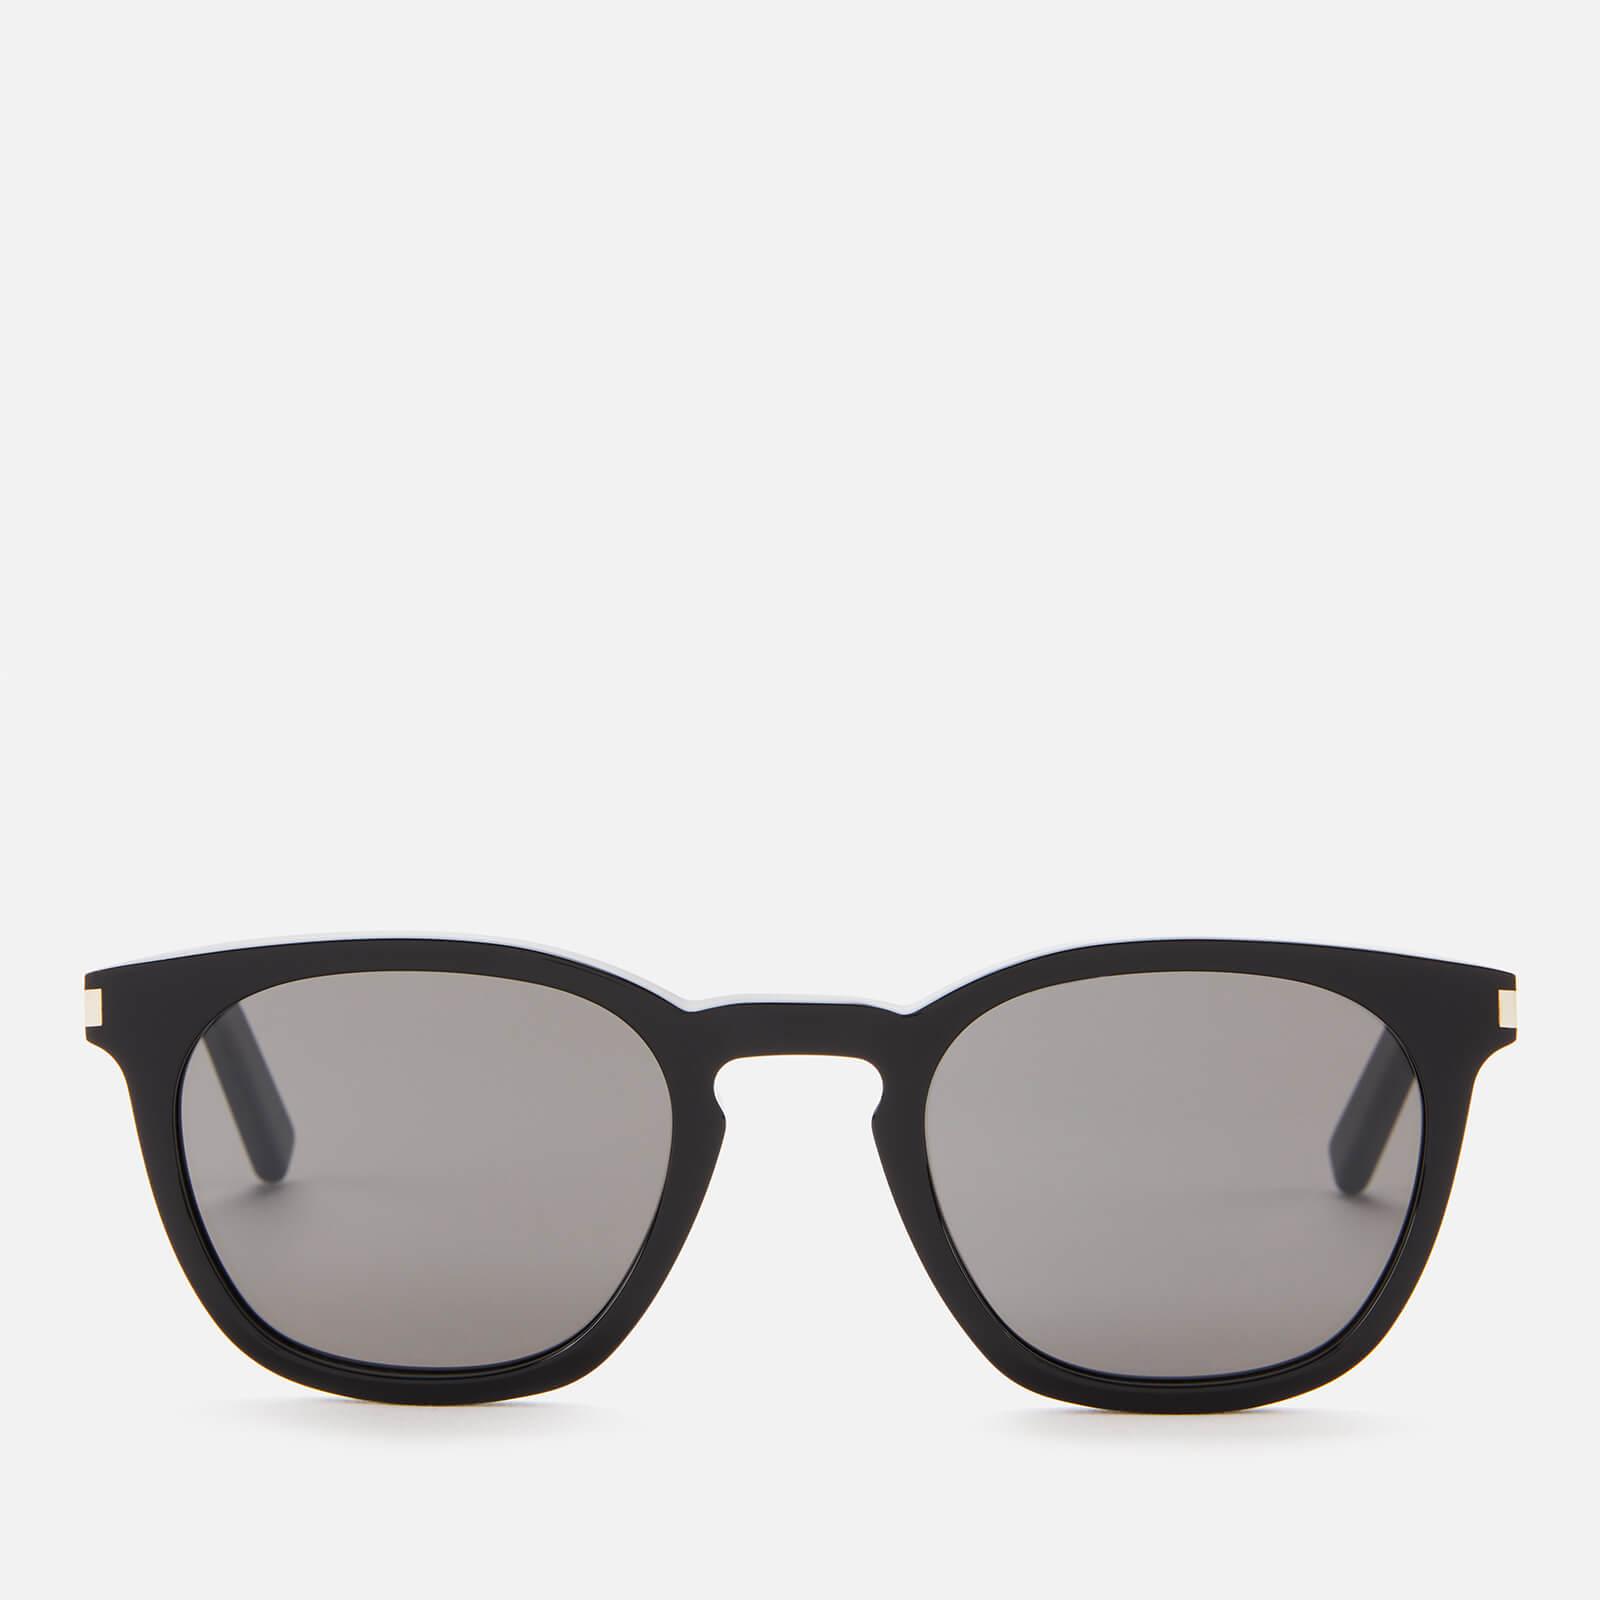 Saint Laurent Sl28 Rectangle Sunglasses in Black,Gray (Black) for Men - Save 27% - Lyst